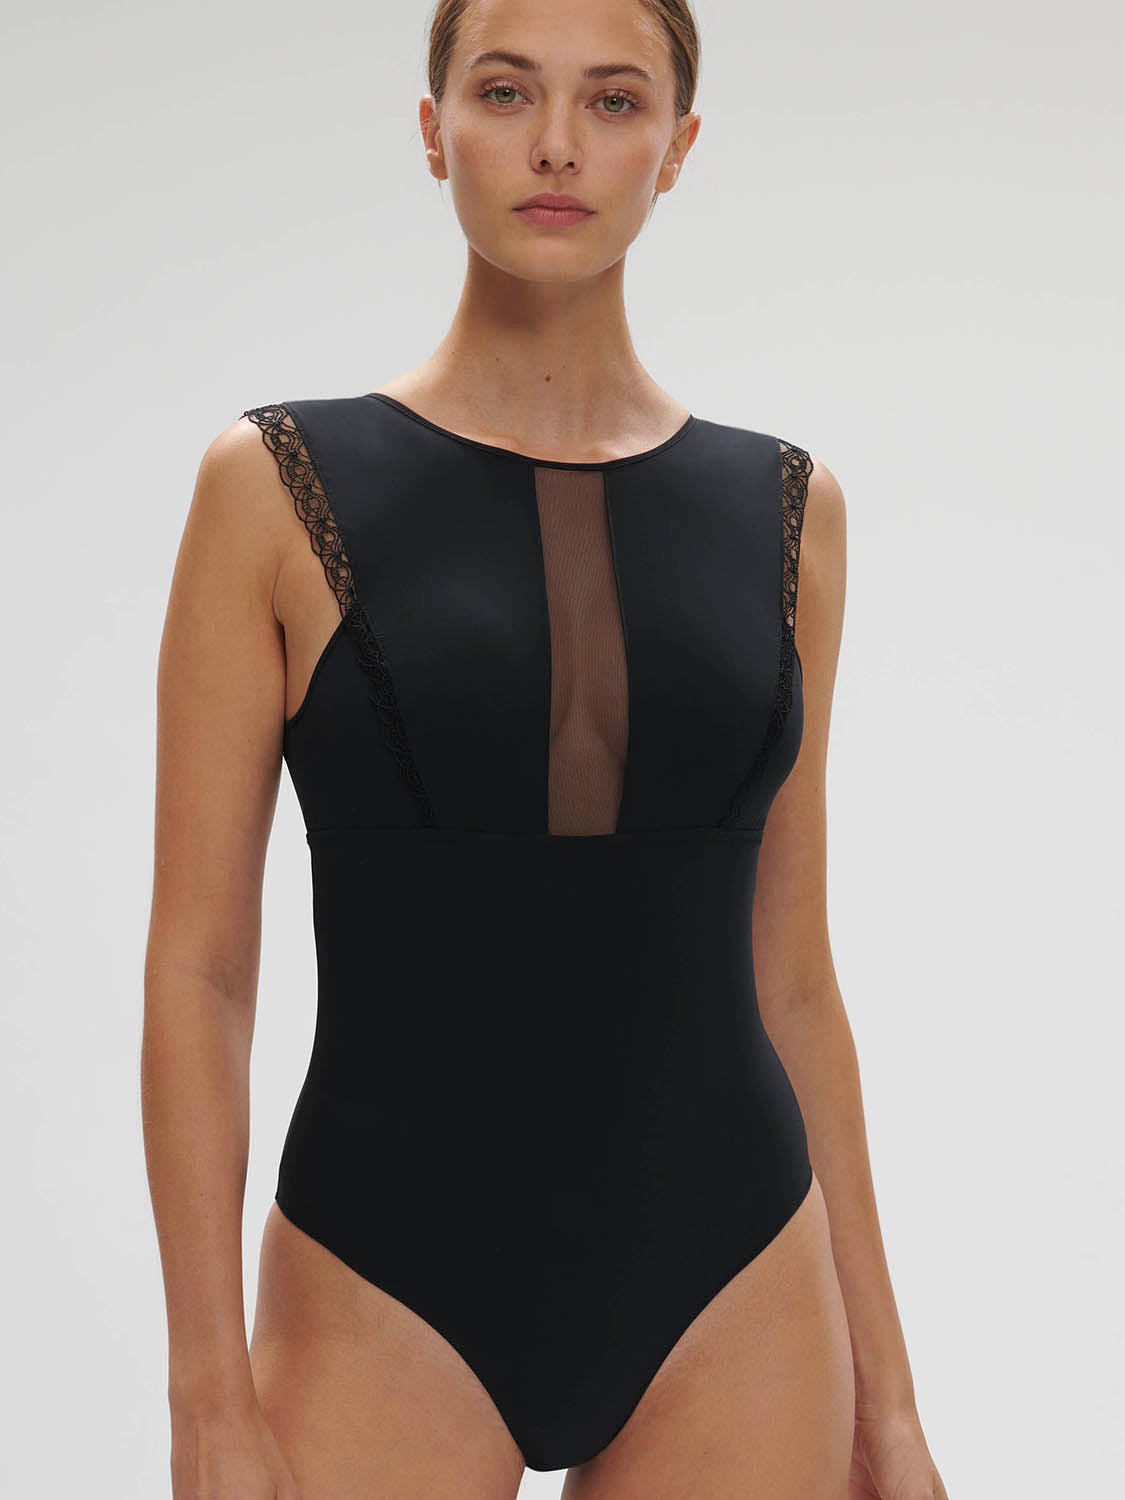 Black Lace Bodysuit  Buy Bodysuits Online Australia- THE ICONIC